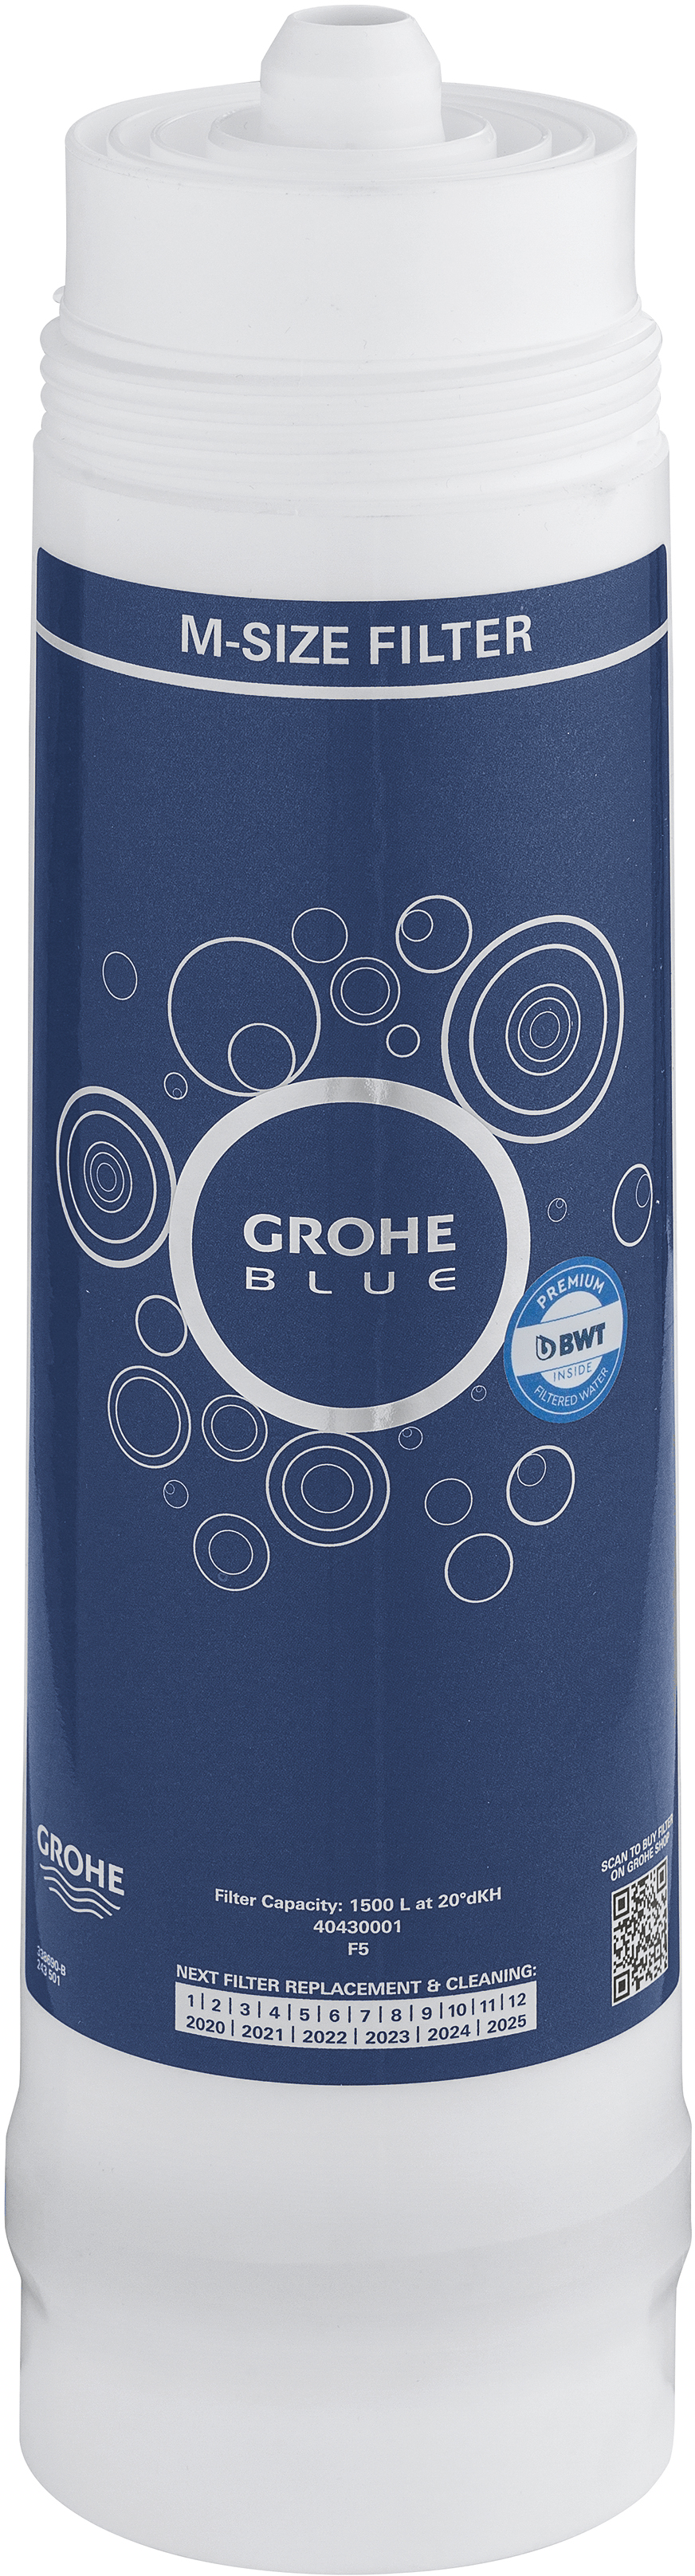 Фильтр Grohe Blue 40430001 M-Size, без насадки